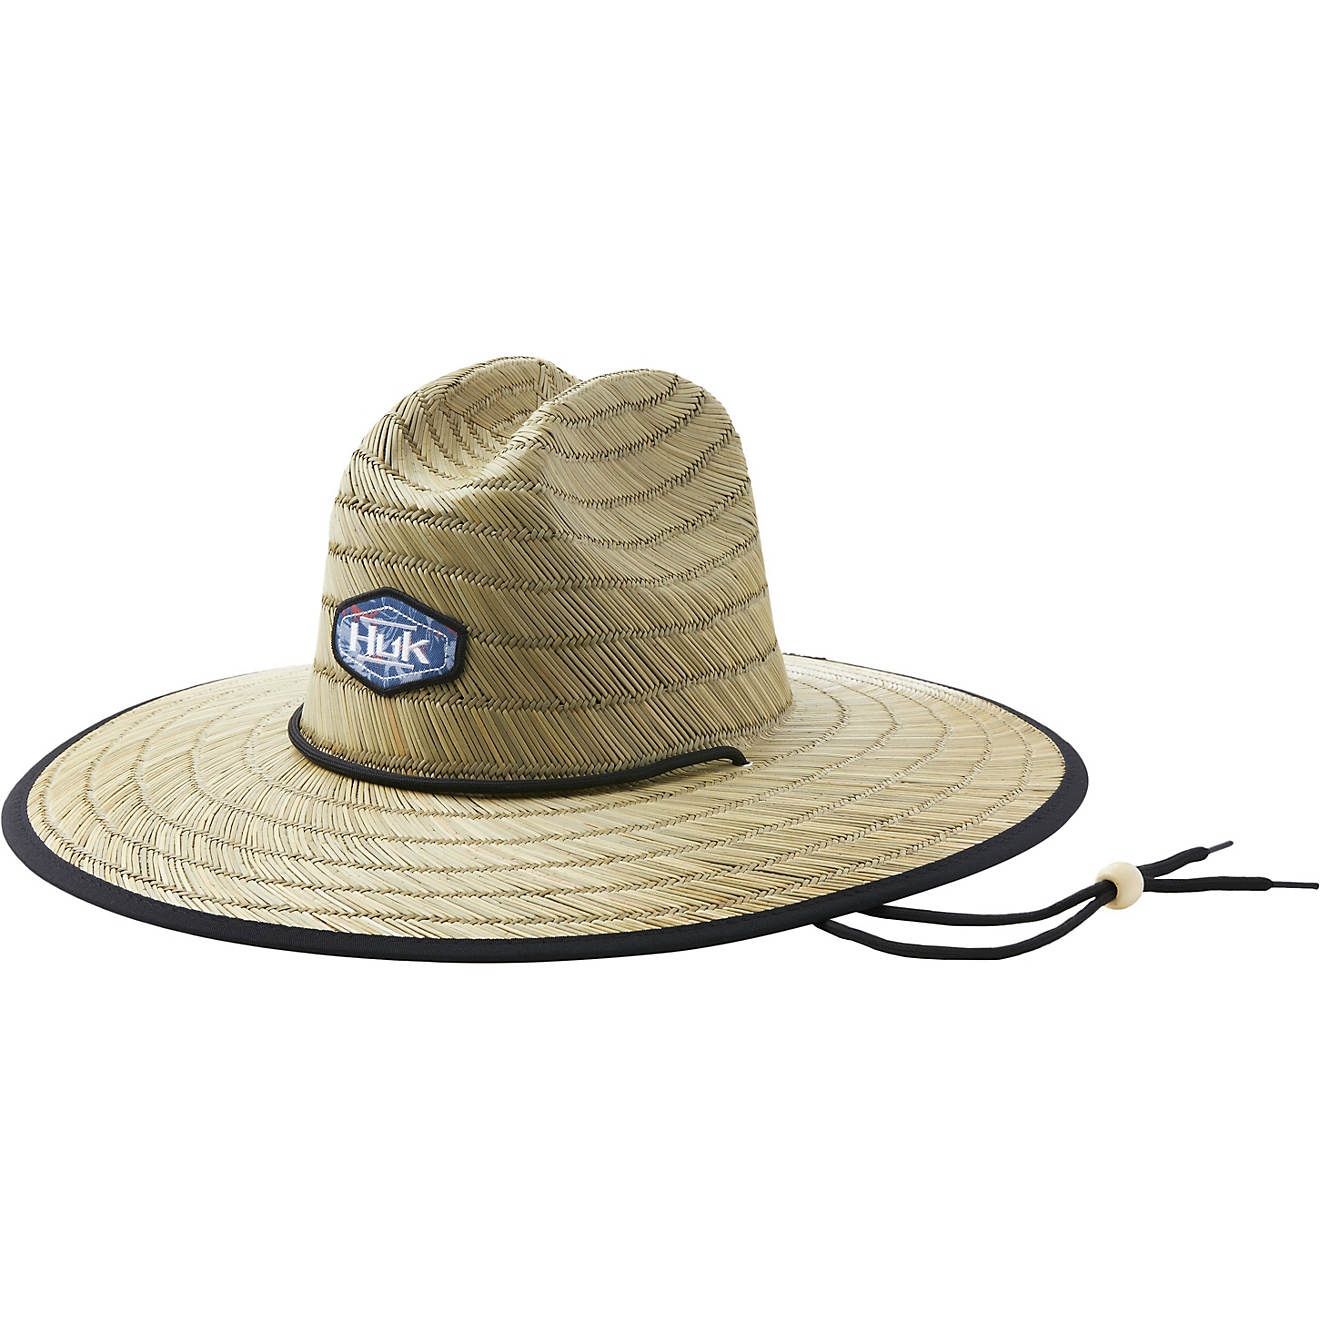 Huk Men's Ocean Palm Straw Hat                                                                                                   - view number 1